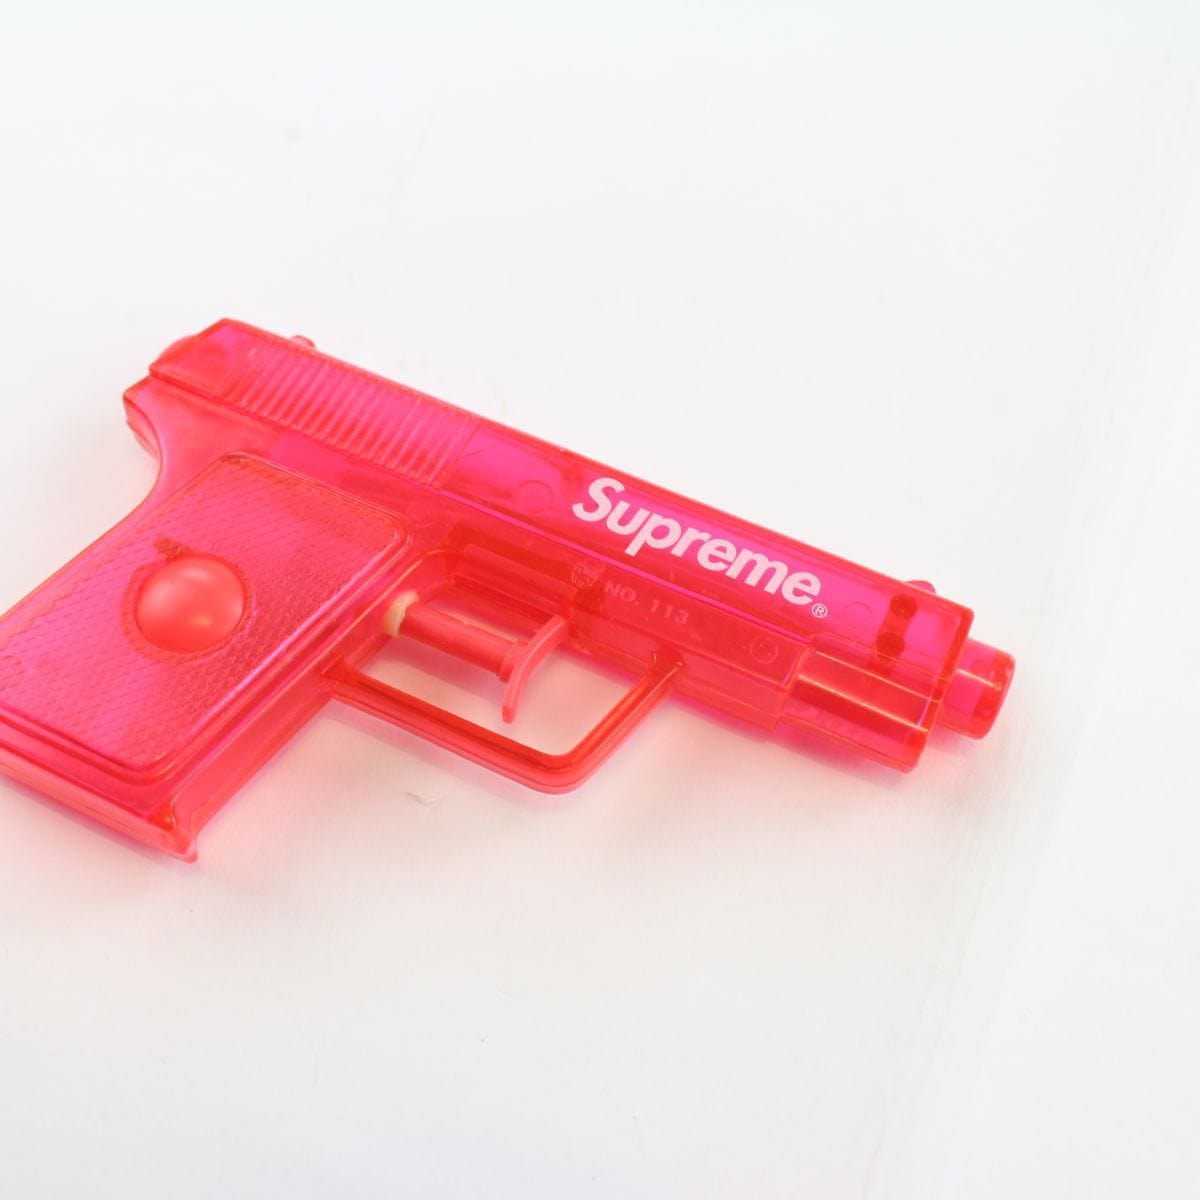 Supreme Red Water Pistol - SaruGeneral